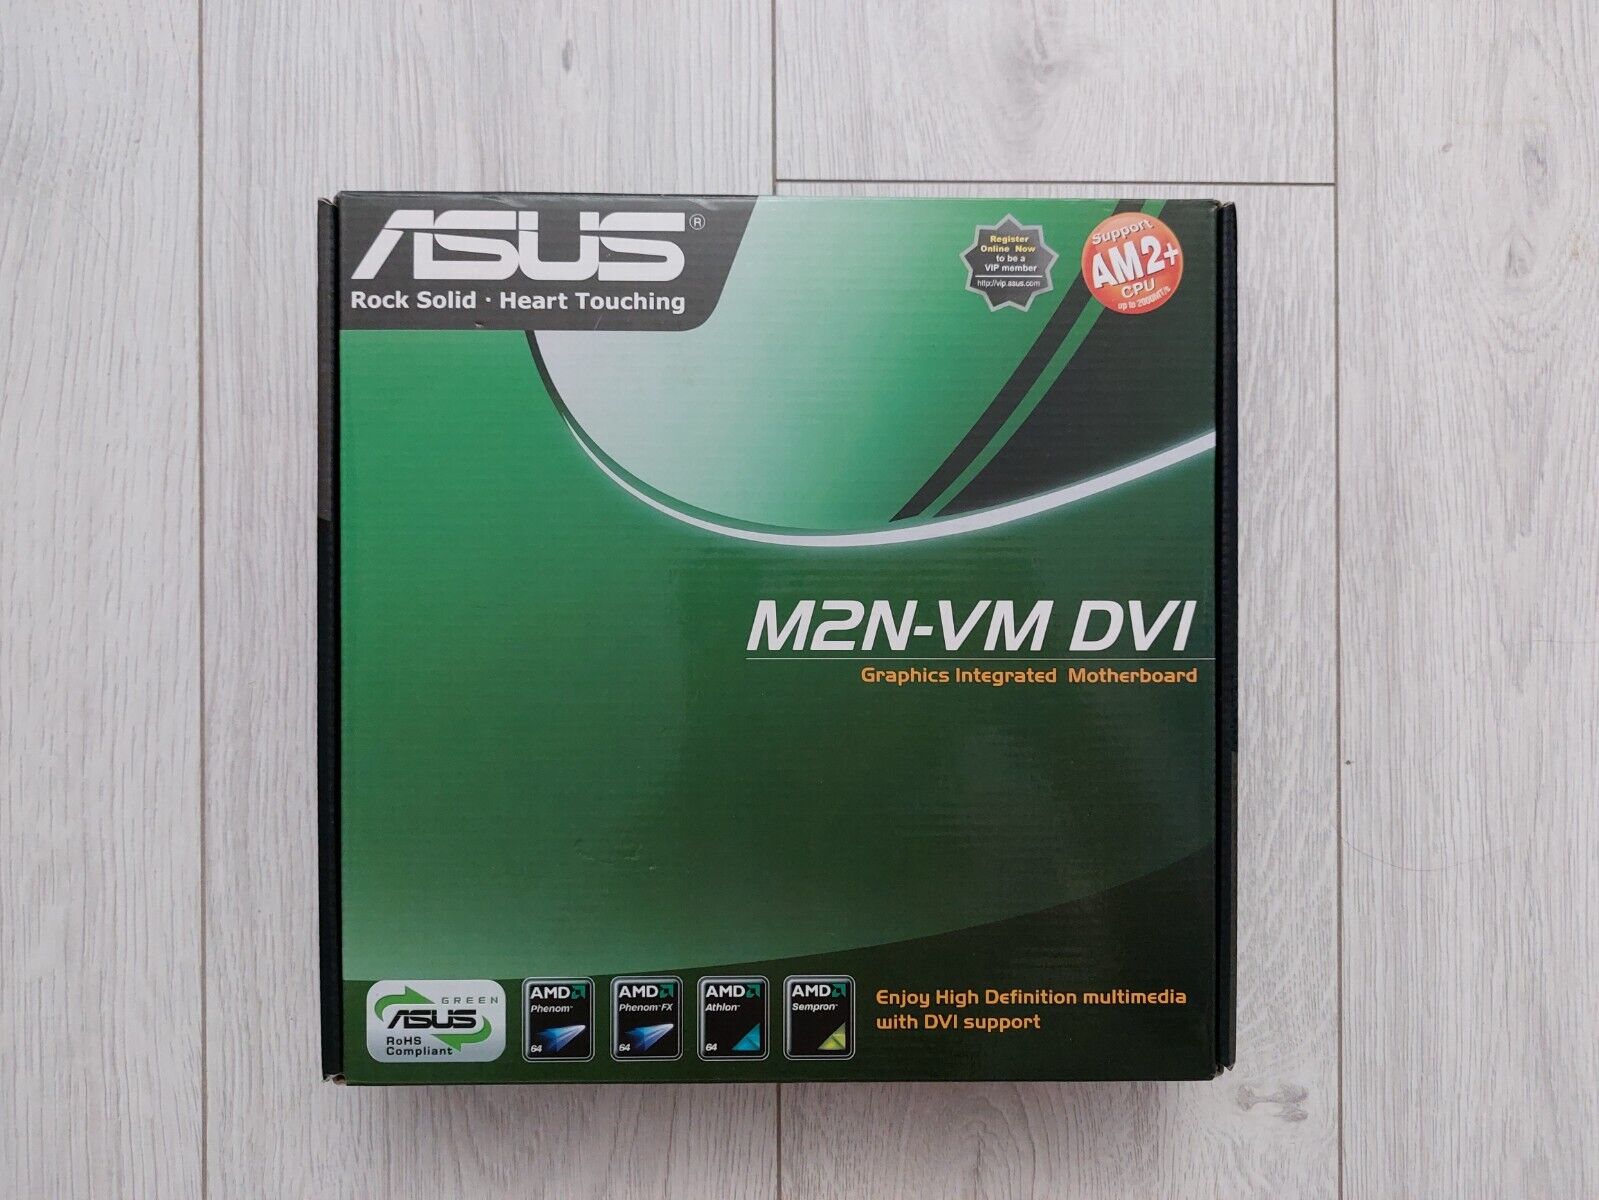 ASUS M2N-VM DVI new in box